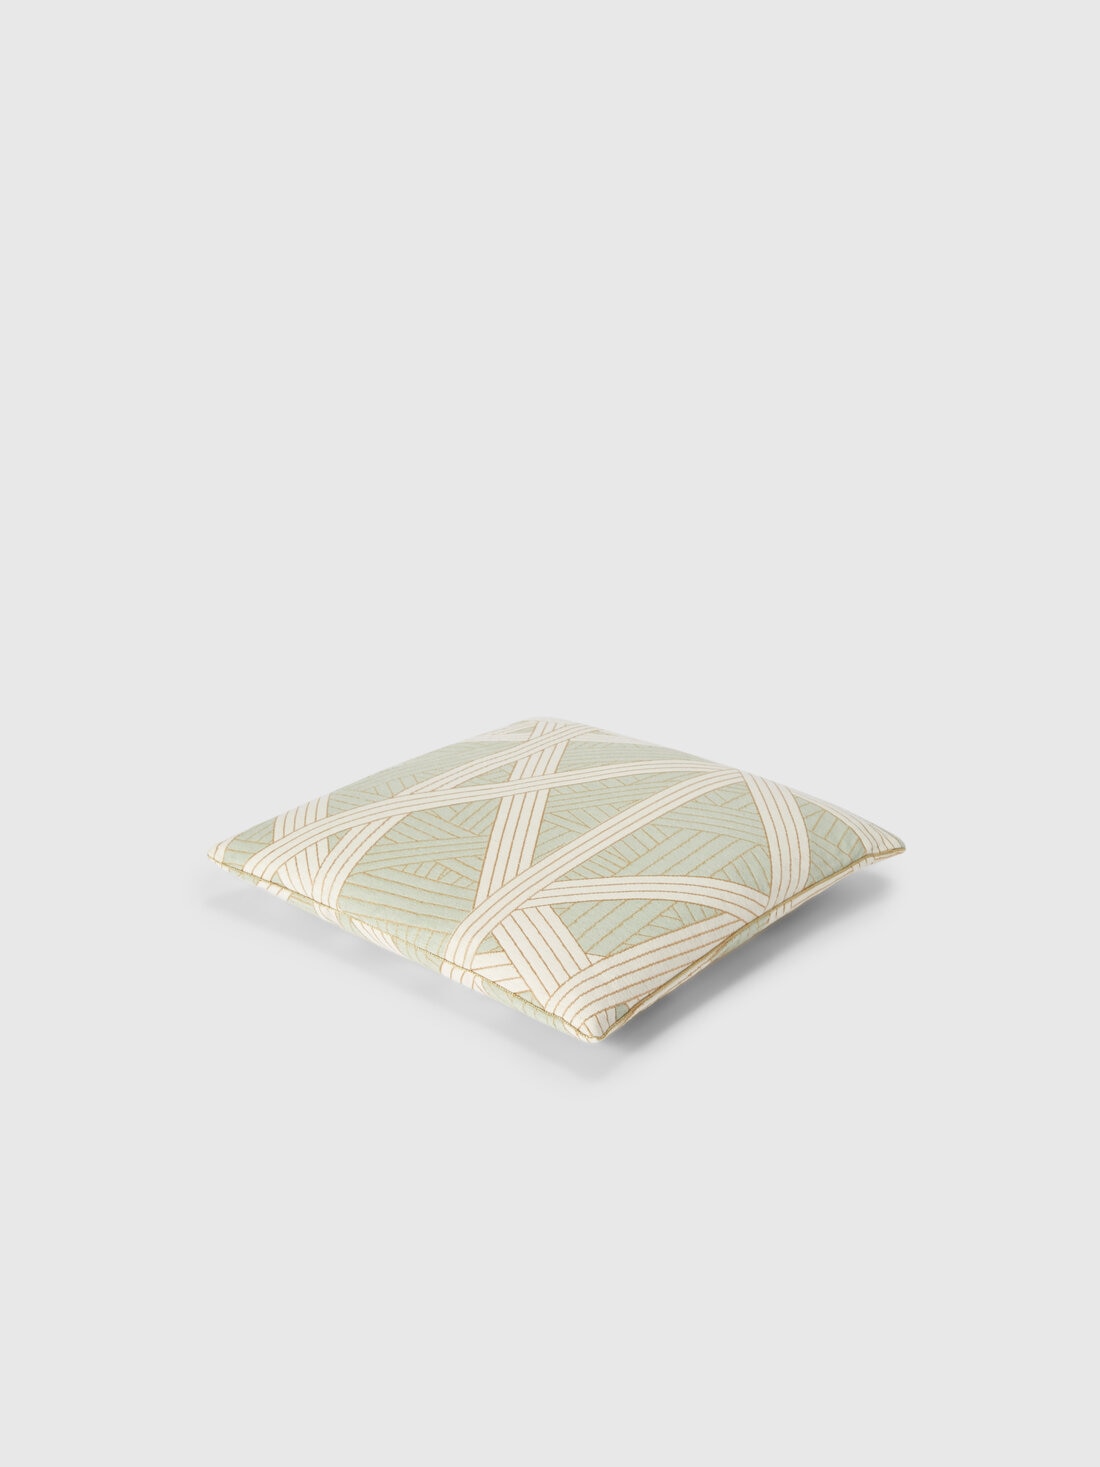 Nastri cushion 40x40 cm with stitching, Green - 8053147119243 - 1